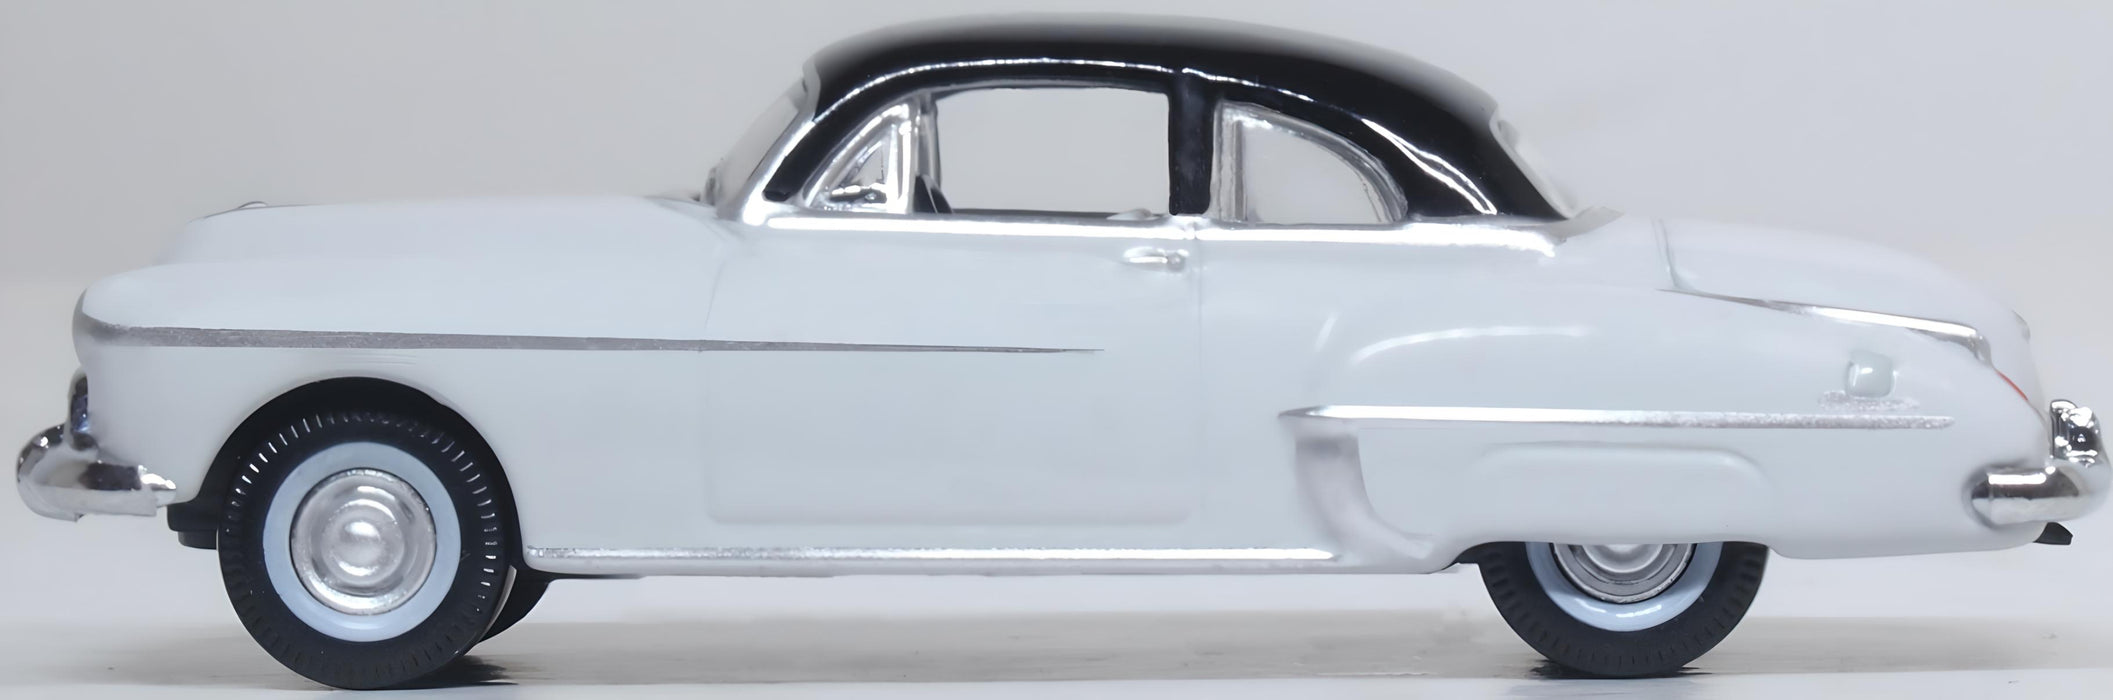 Oxford Diecast Marol Grey/Black Oldsmobile Rocket 88 Coupe 1950 -1:87 Scale 87OR50005 left